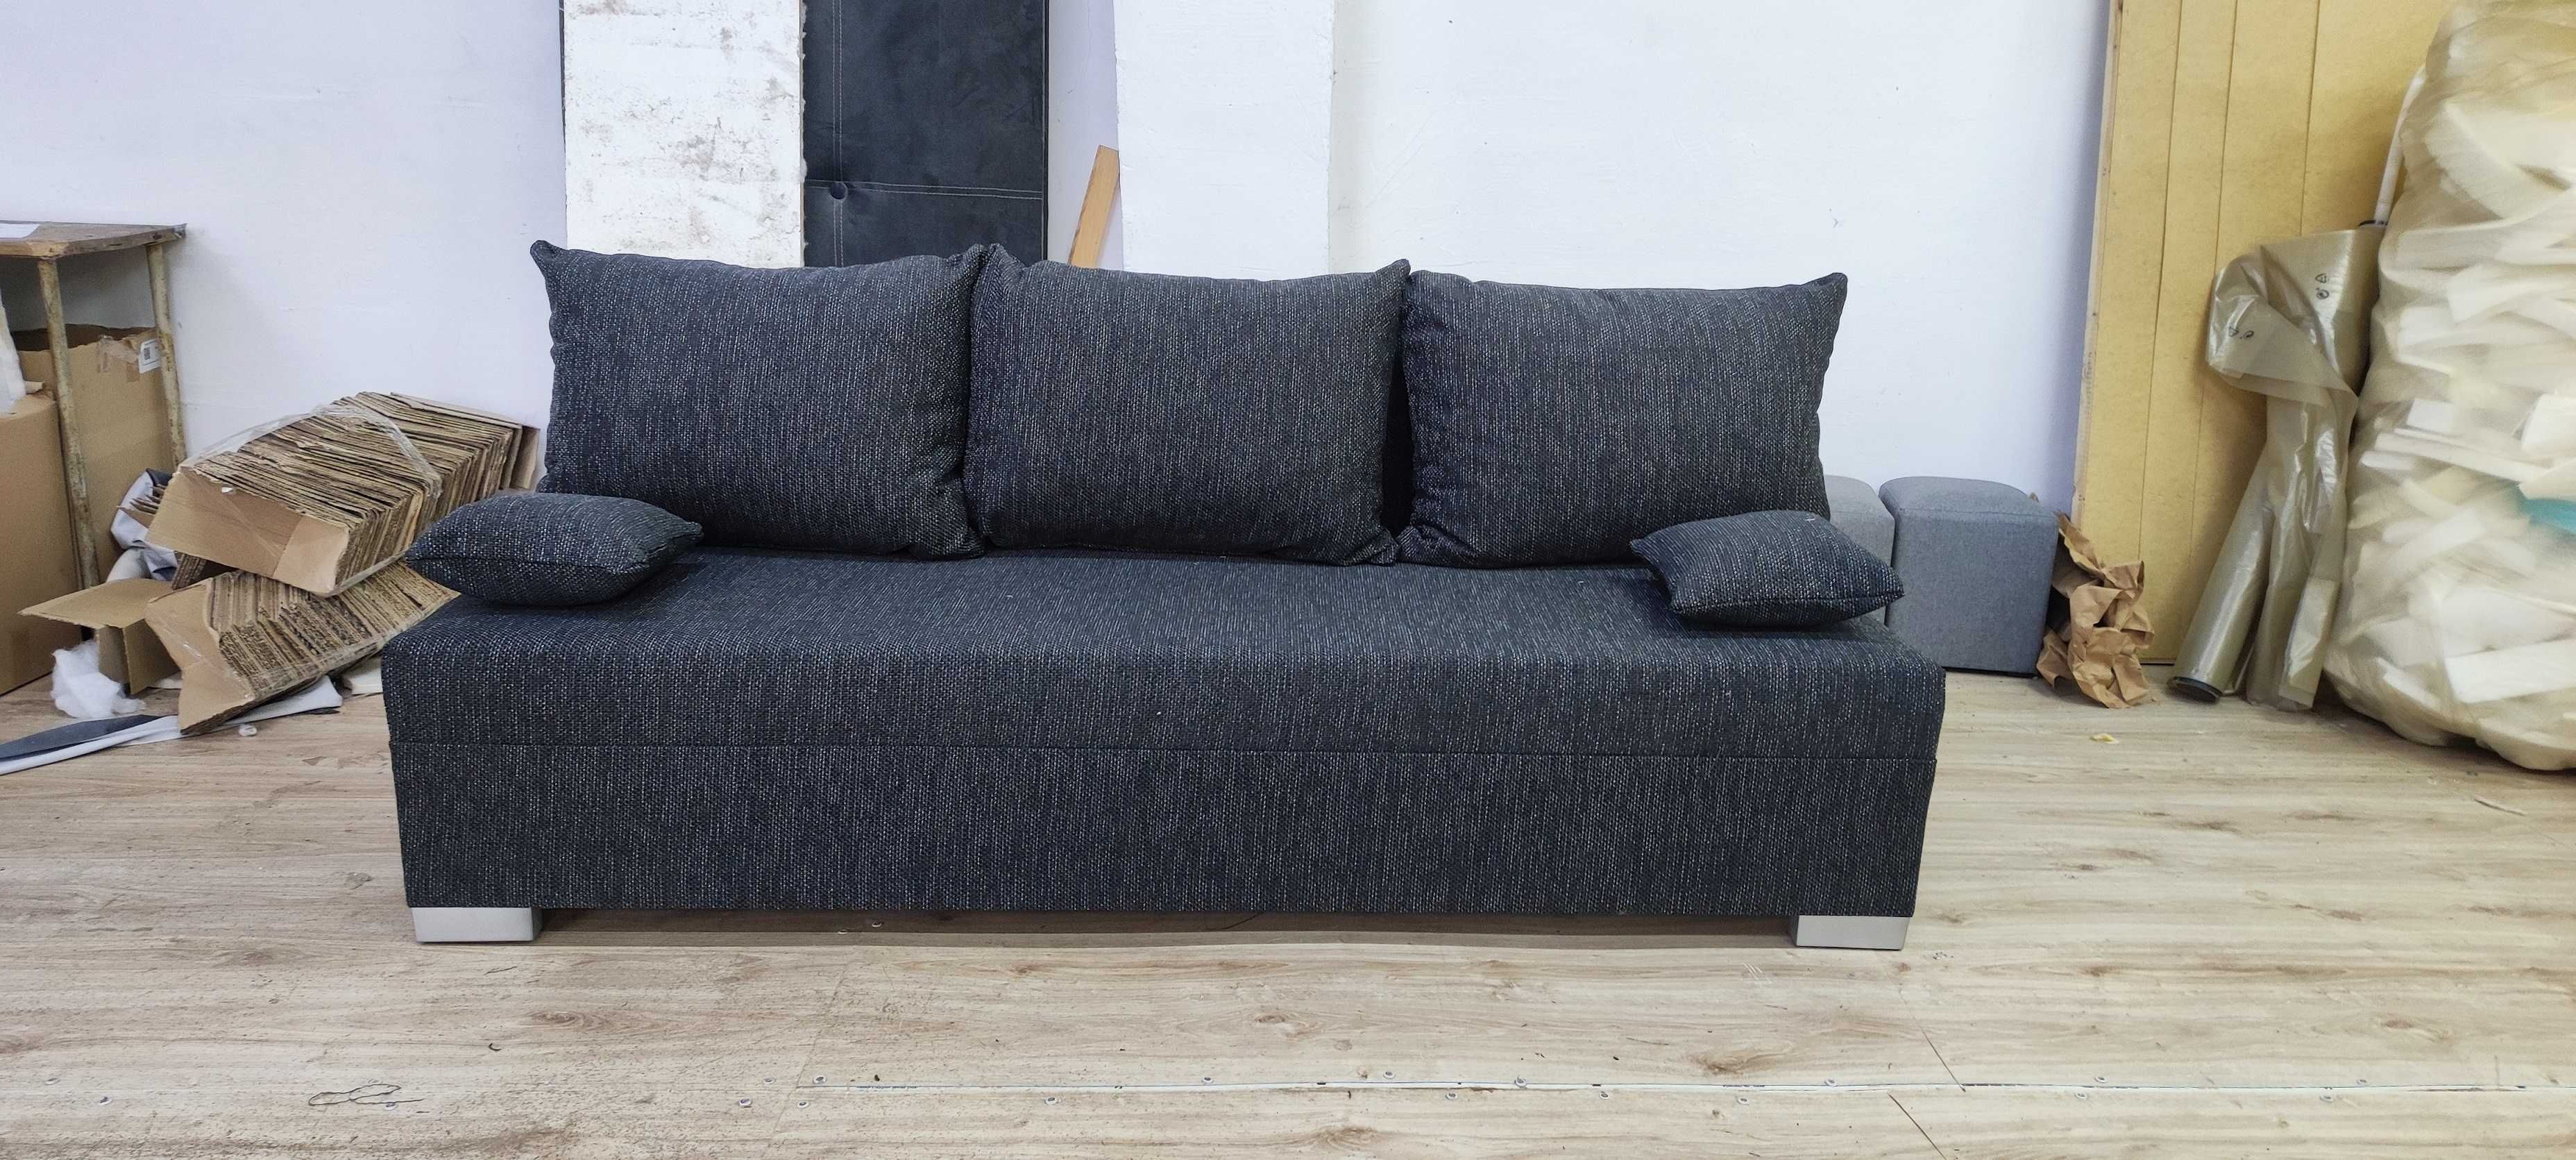 Kanapa NEO od producenta - Wersalka sofa Dowolne kolory